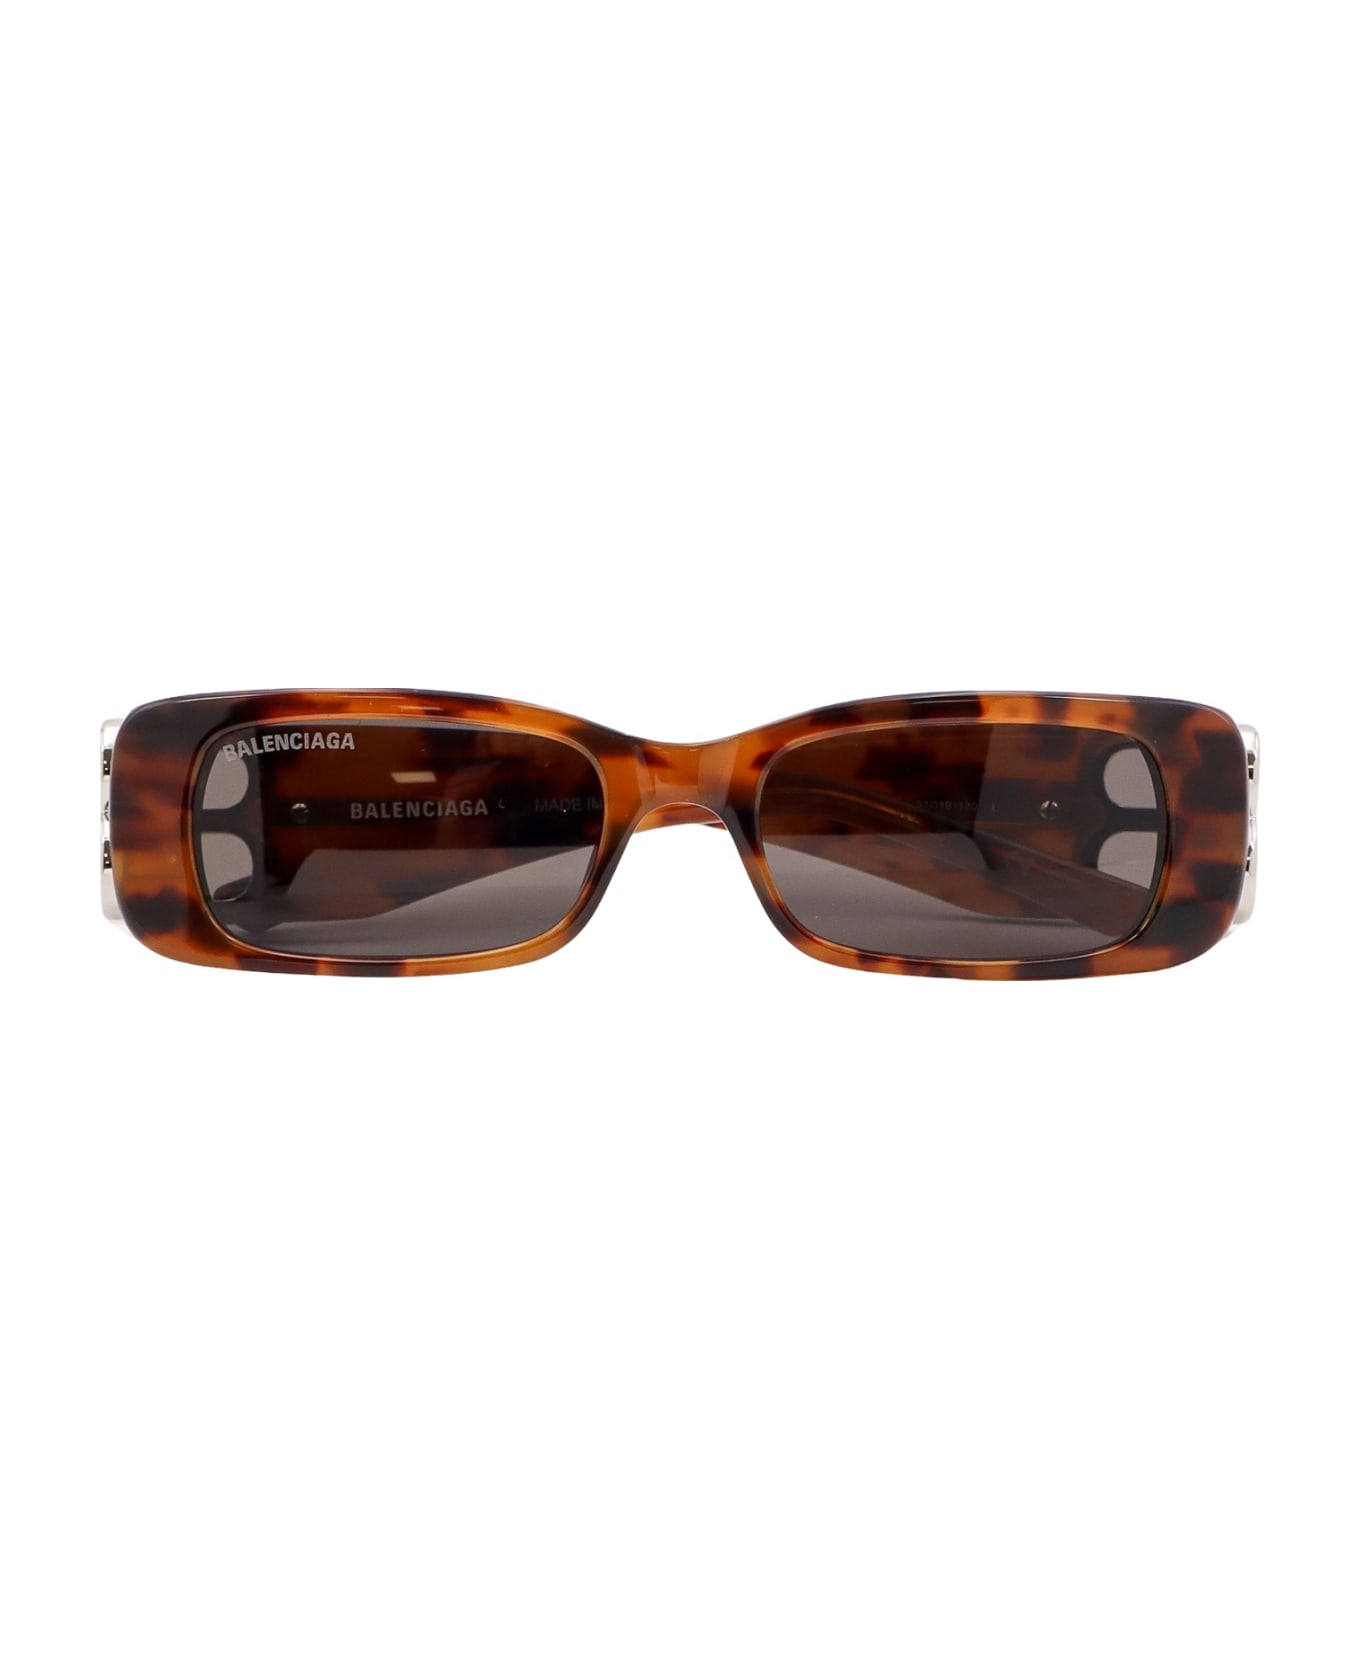 Balenciaga Sunglasses - Brown サングラス